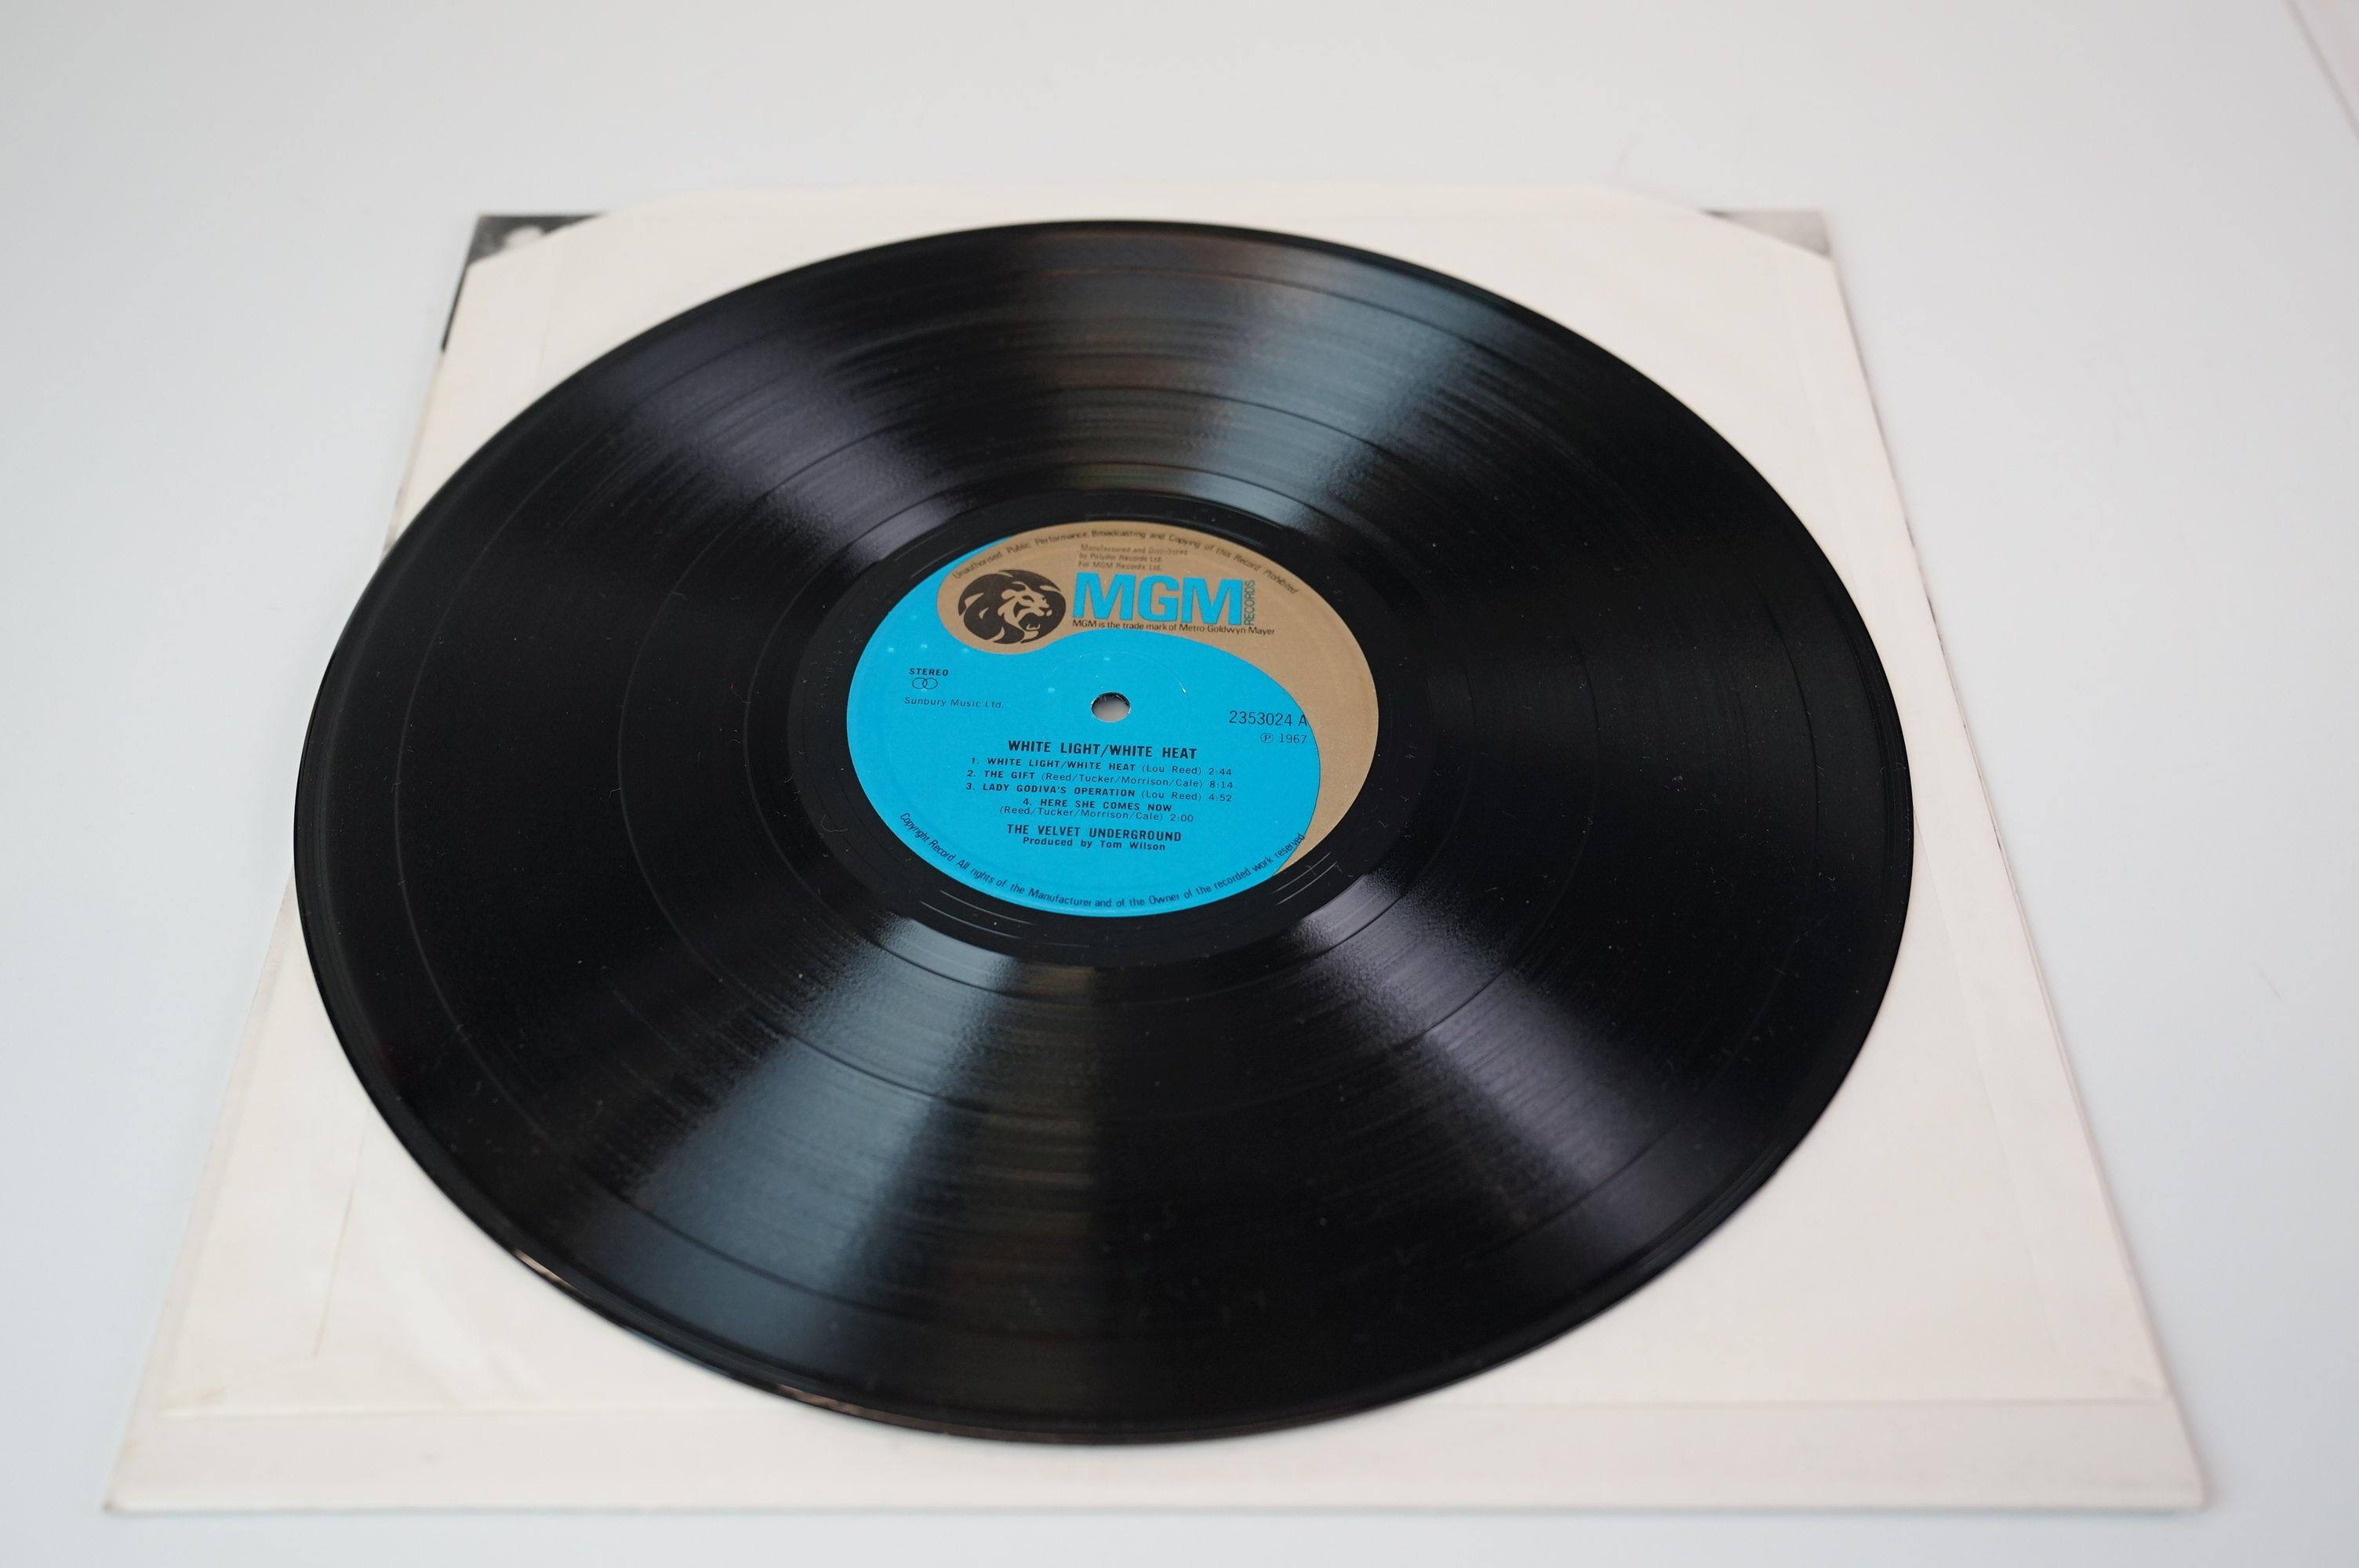 Vinyl - Four Velvet Underground LPs to include White Light/White Heat MGM 2353024, Loaded ( - Image 22 of 31